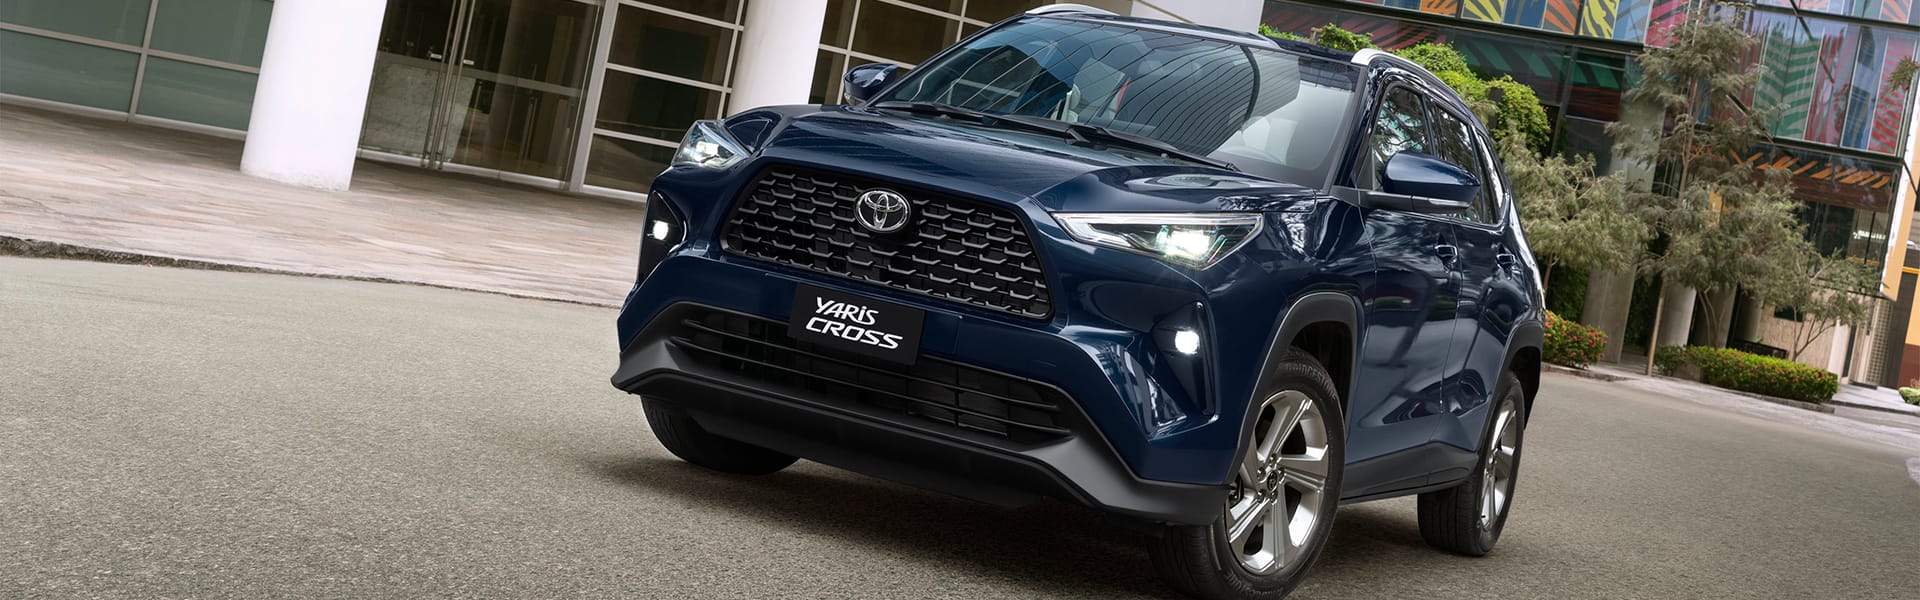 Yaris Cross Hybrid - Overview - Toyota Trinidad